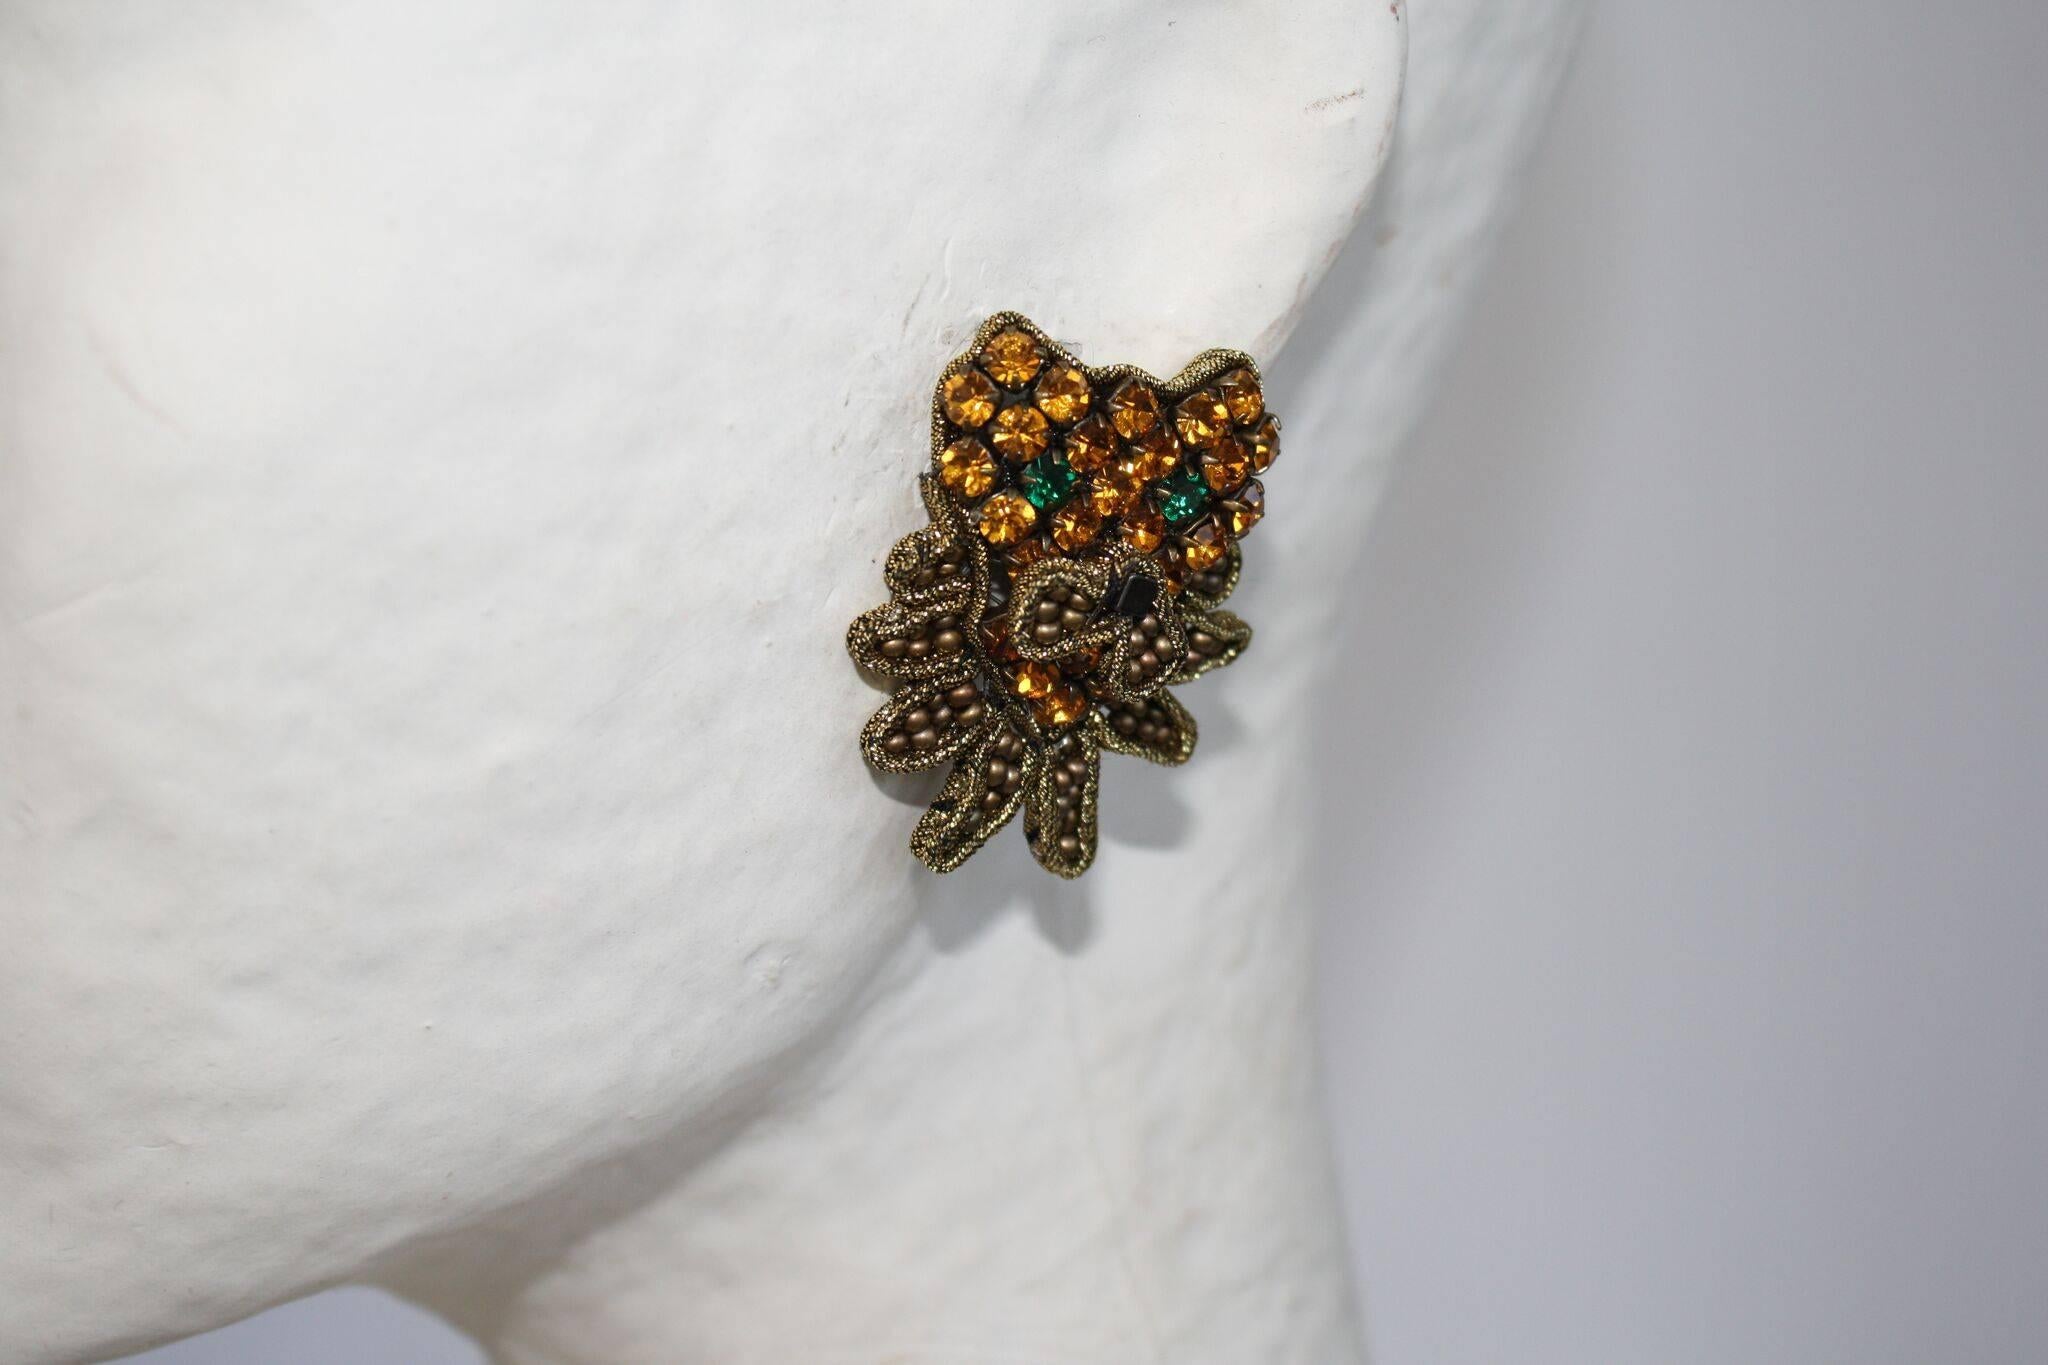 Swarovski Crystal, glass bead, and lurex ribbon lion inspired pierced earrings from Italian designer Tataborello.